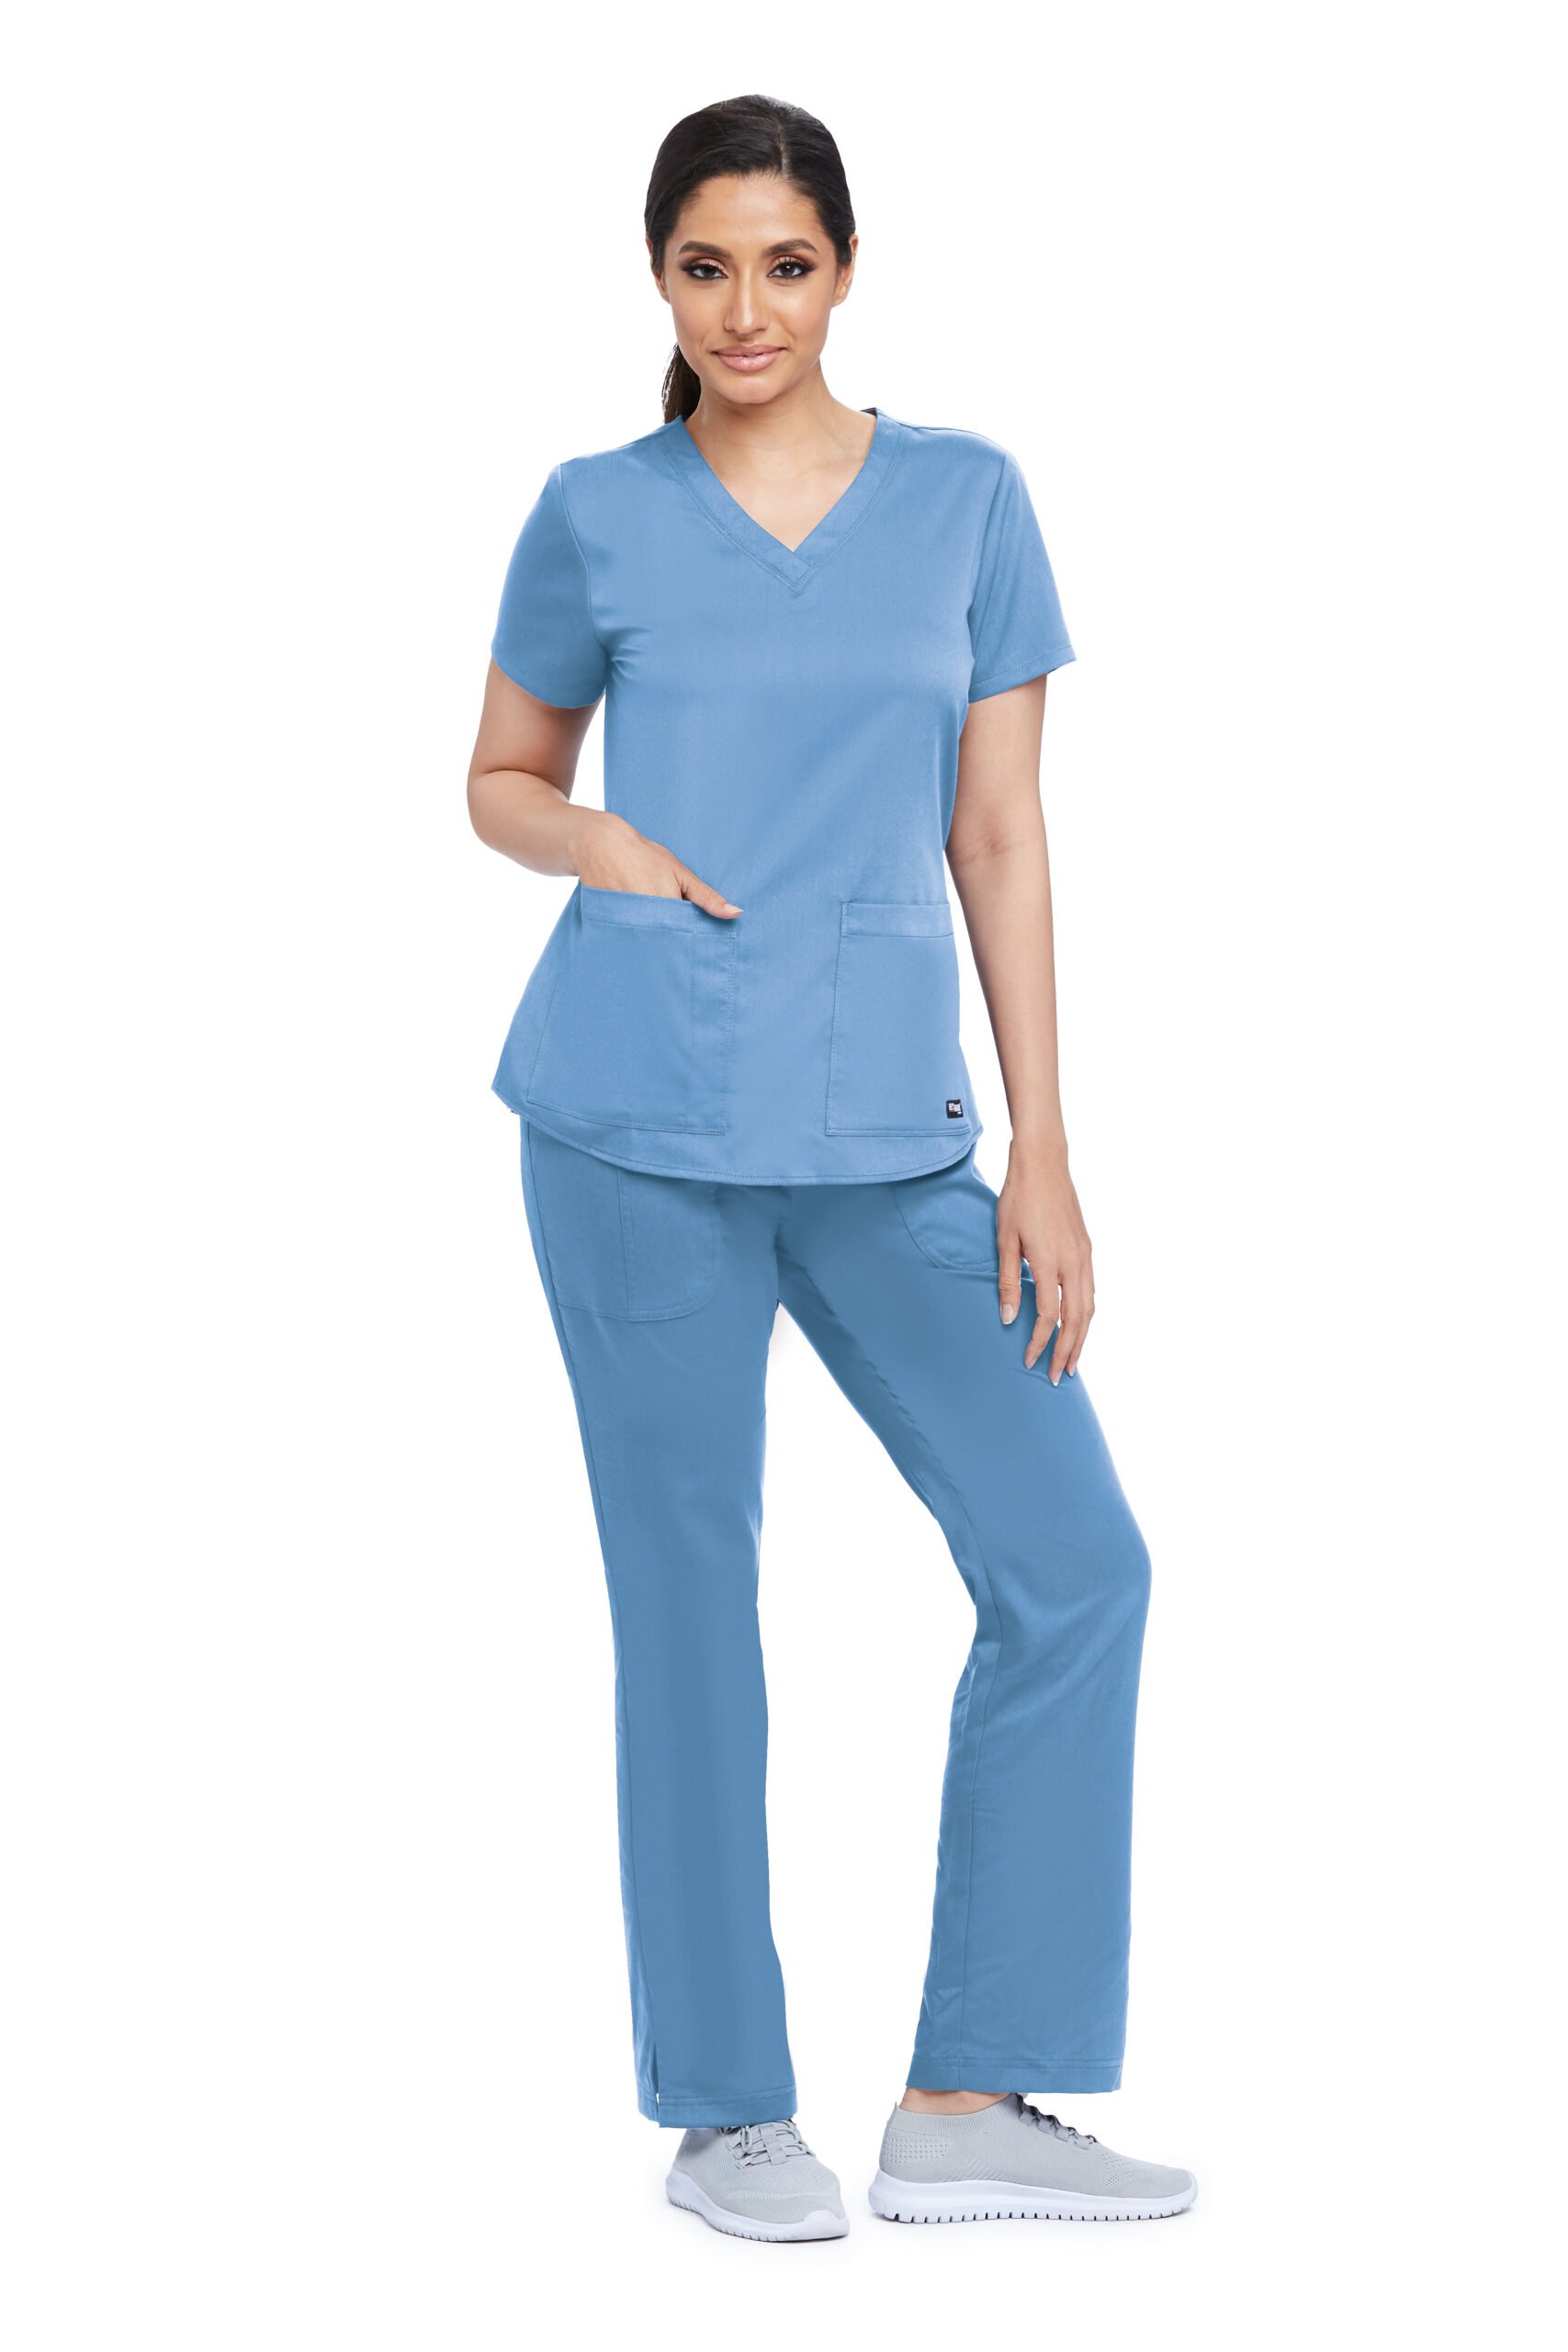 Grey's Anatomy Classic Aubrey Top - 2 pocket V-Neck top in Ciel Blue